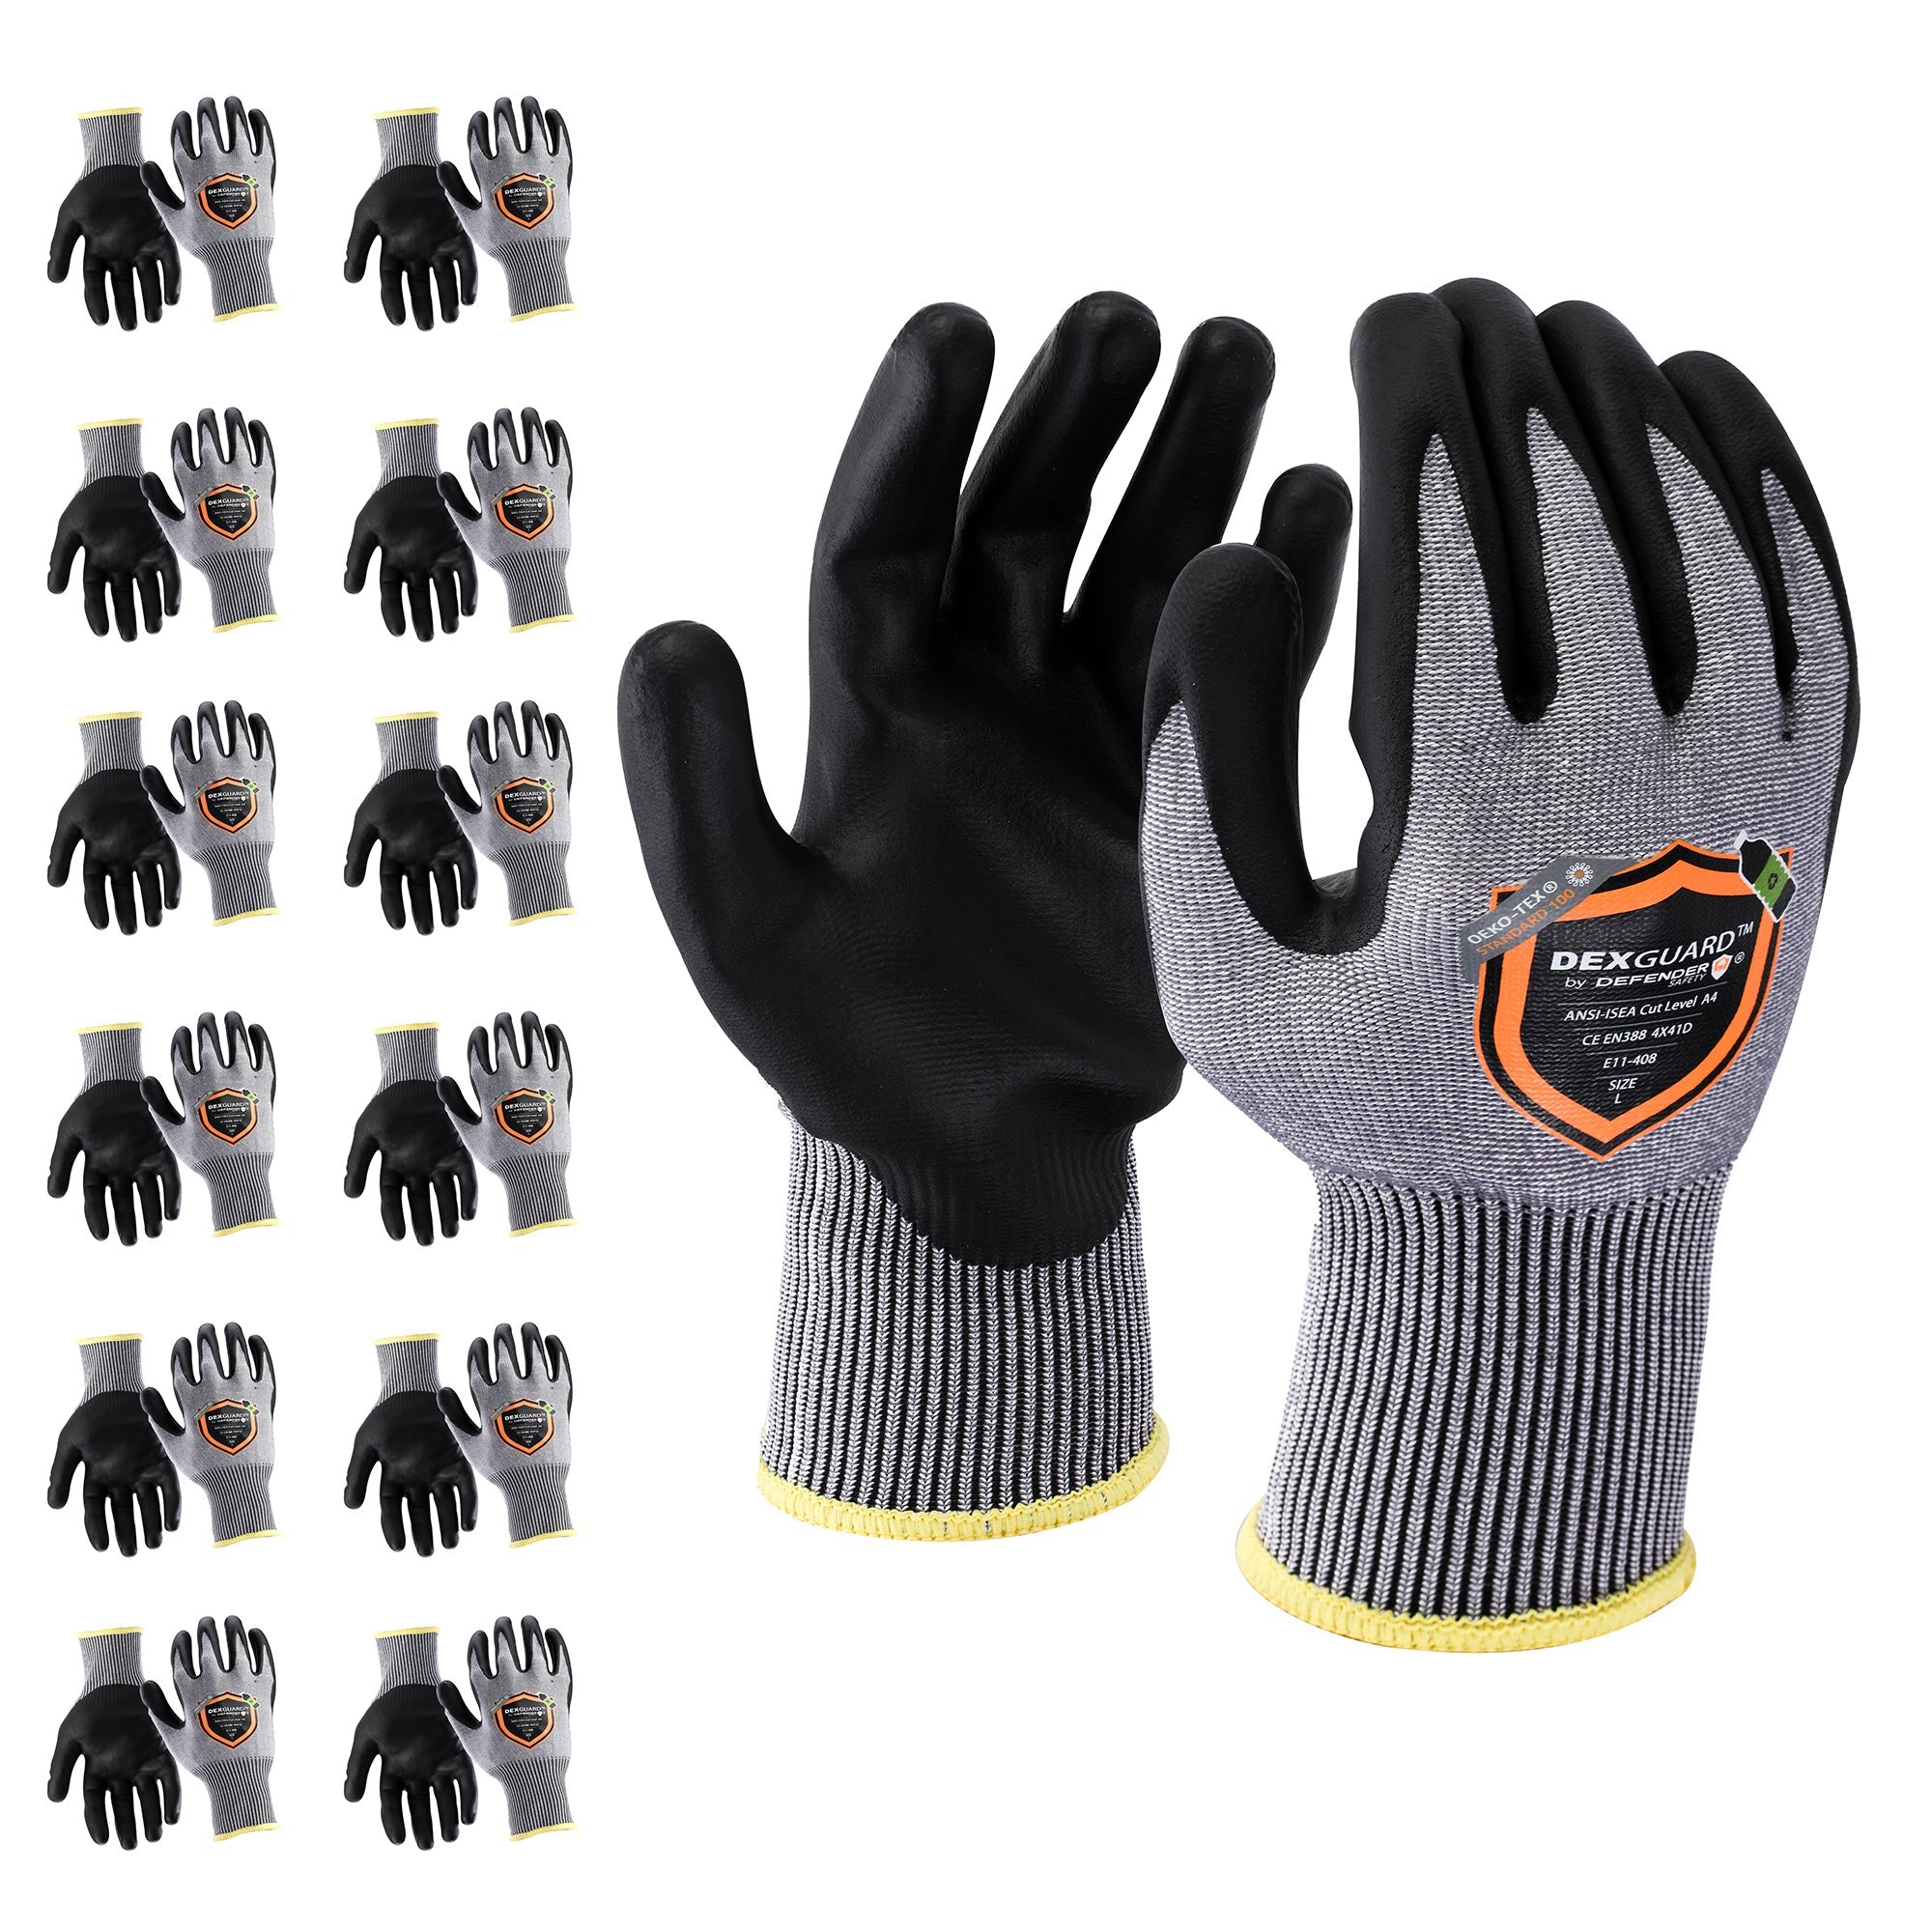 Cut Resistant Gloves - ANSI Cut Levels 1-9